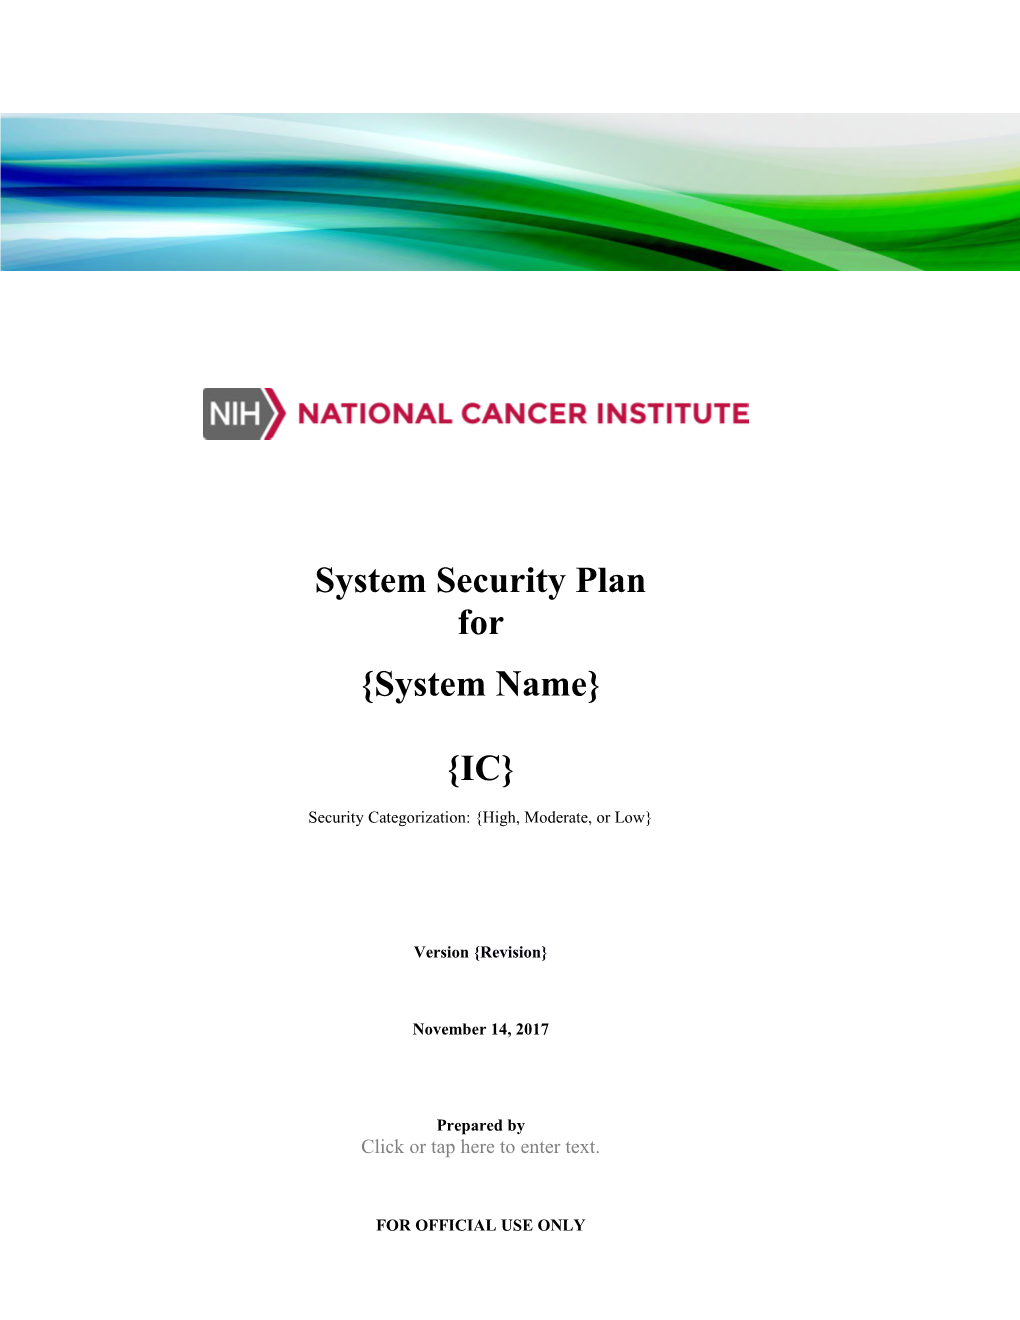 NIH System Security Plan Rev 4 Template